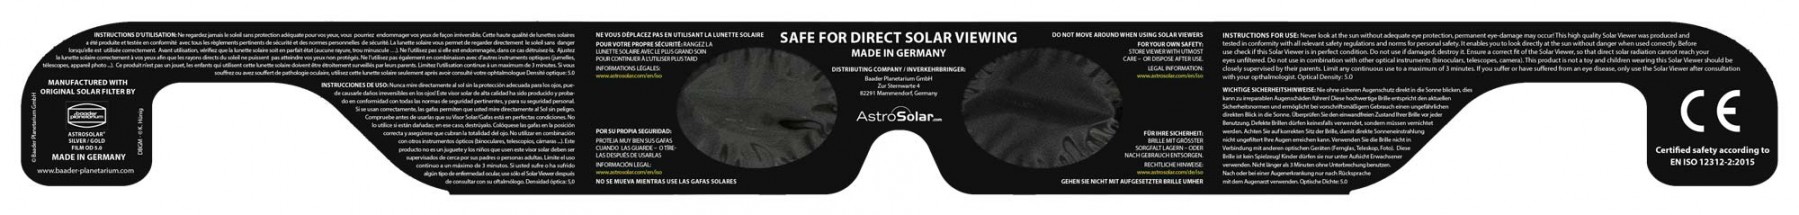 Solar Viewer AstroSolar® Silver/Gold - Backside